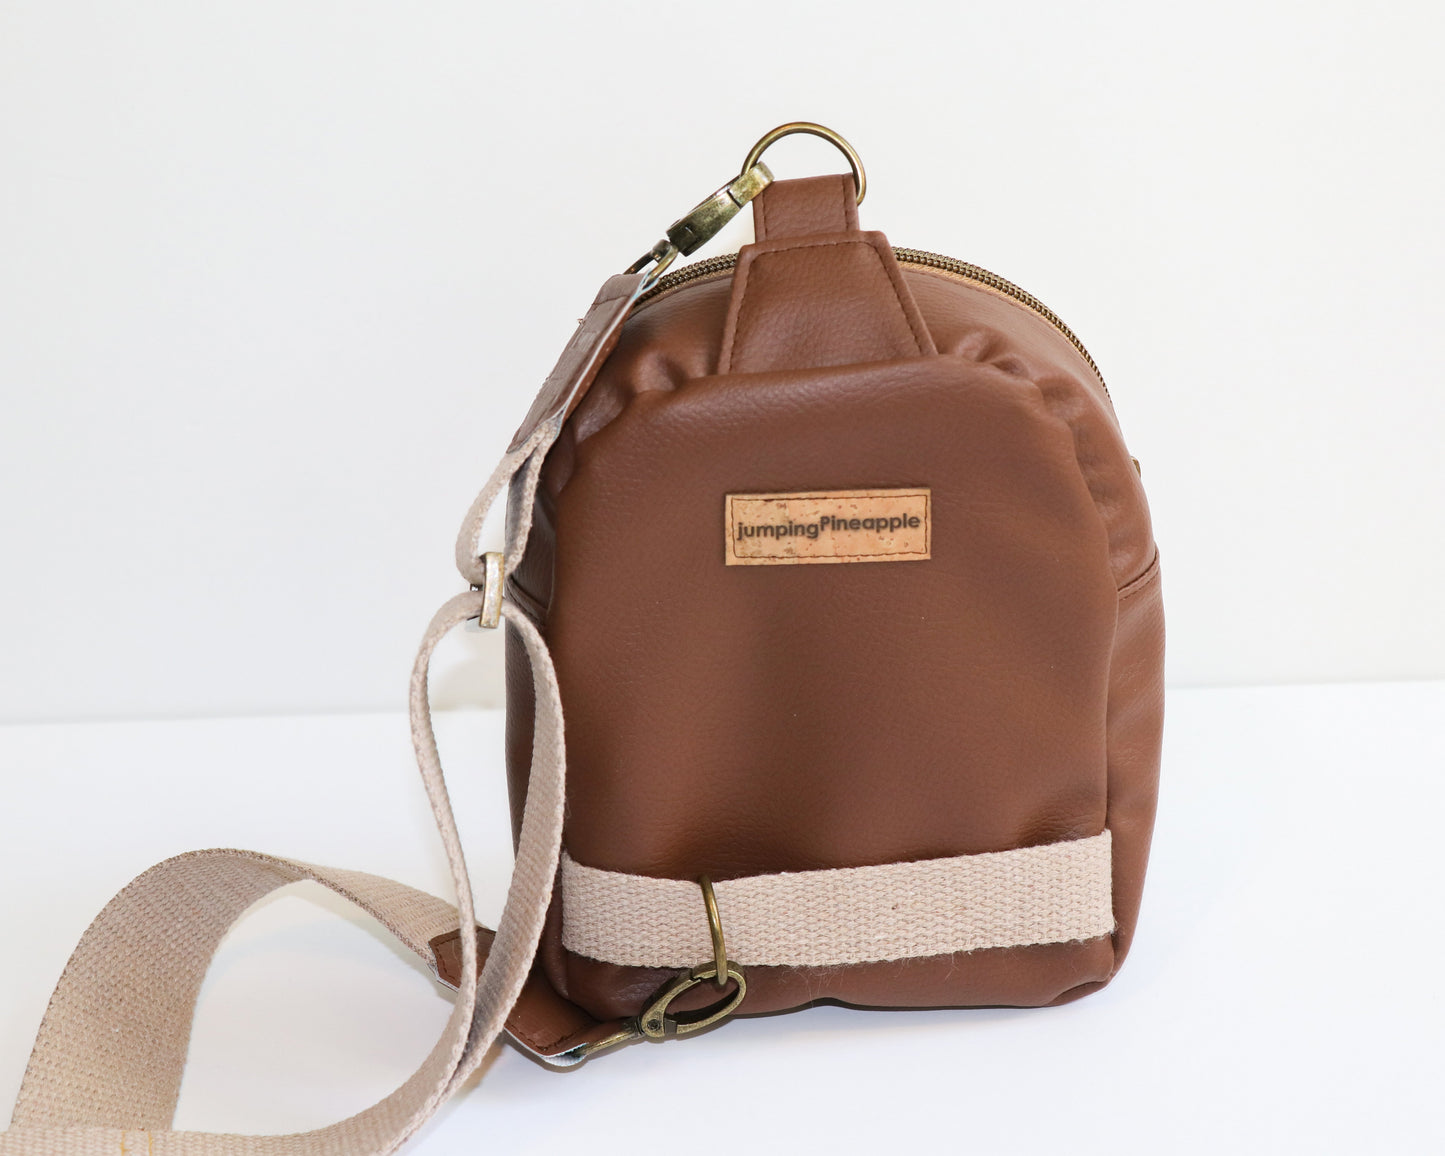 PB & J mini backpack sling, back view